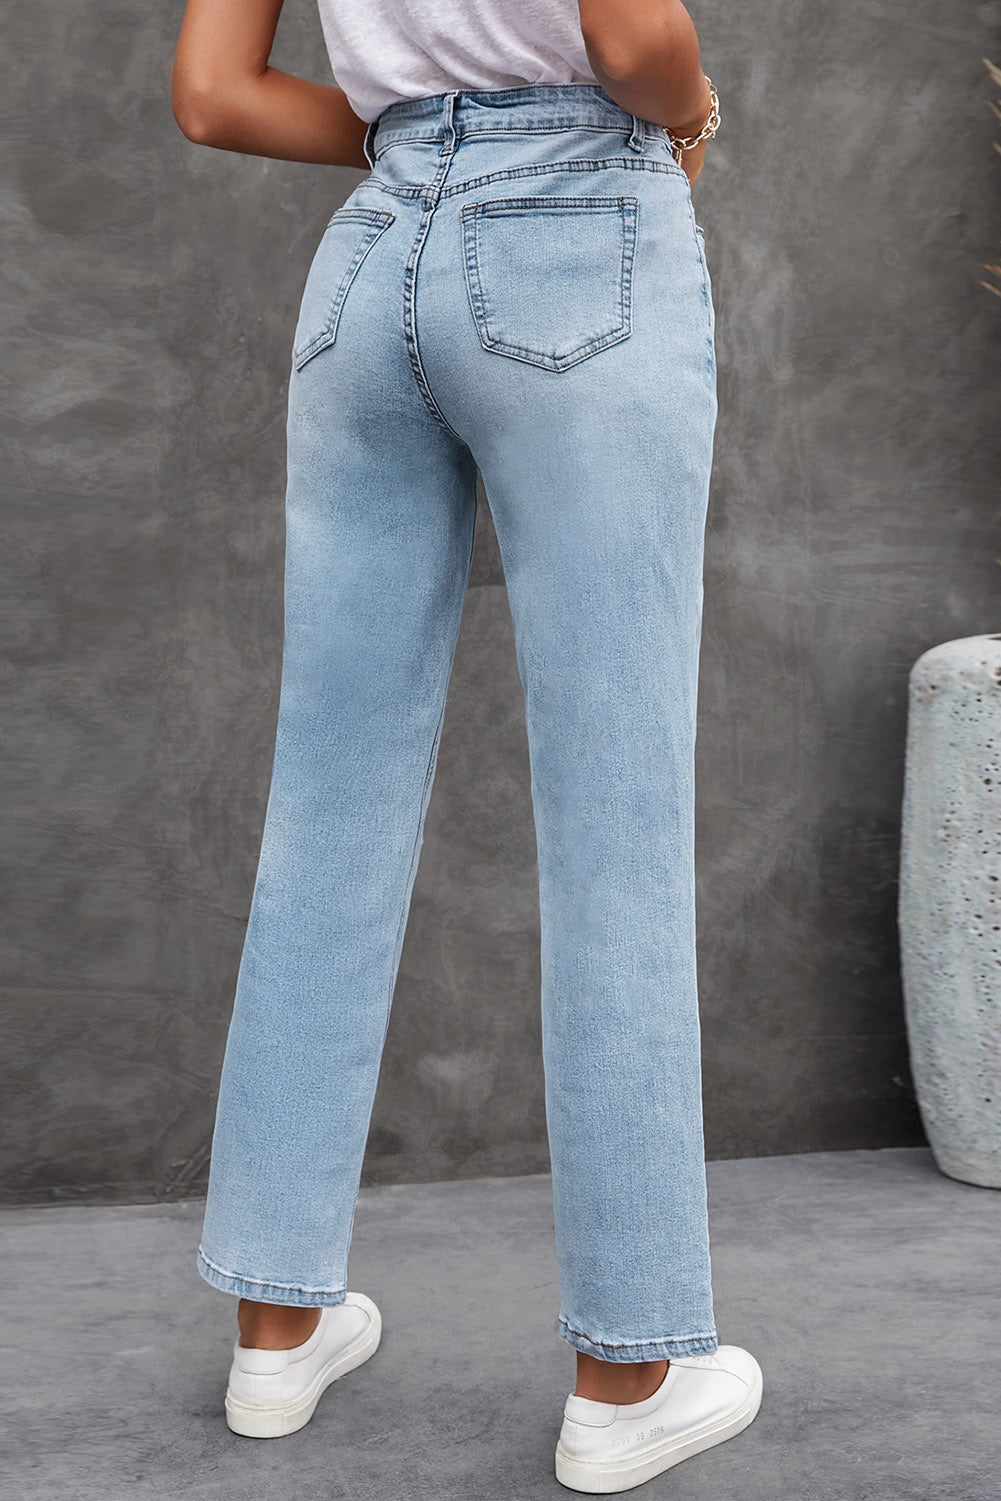 Asymmetrical High Waist Distressed Jeans